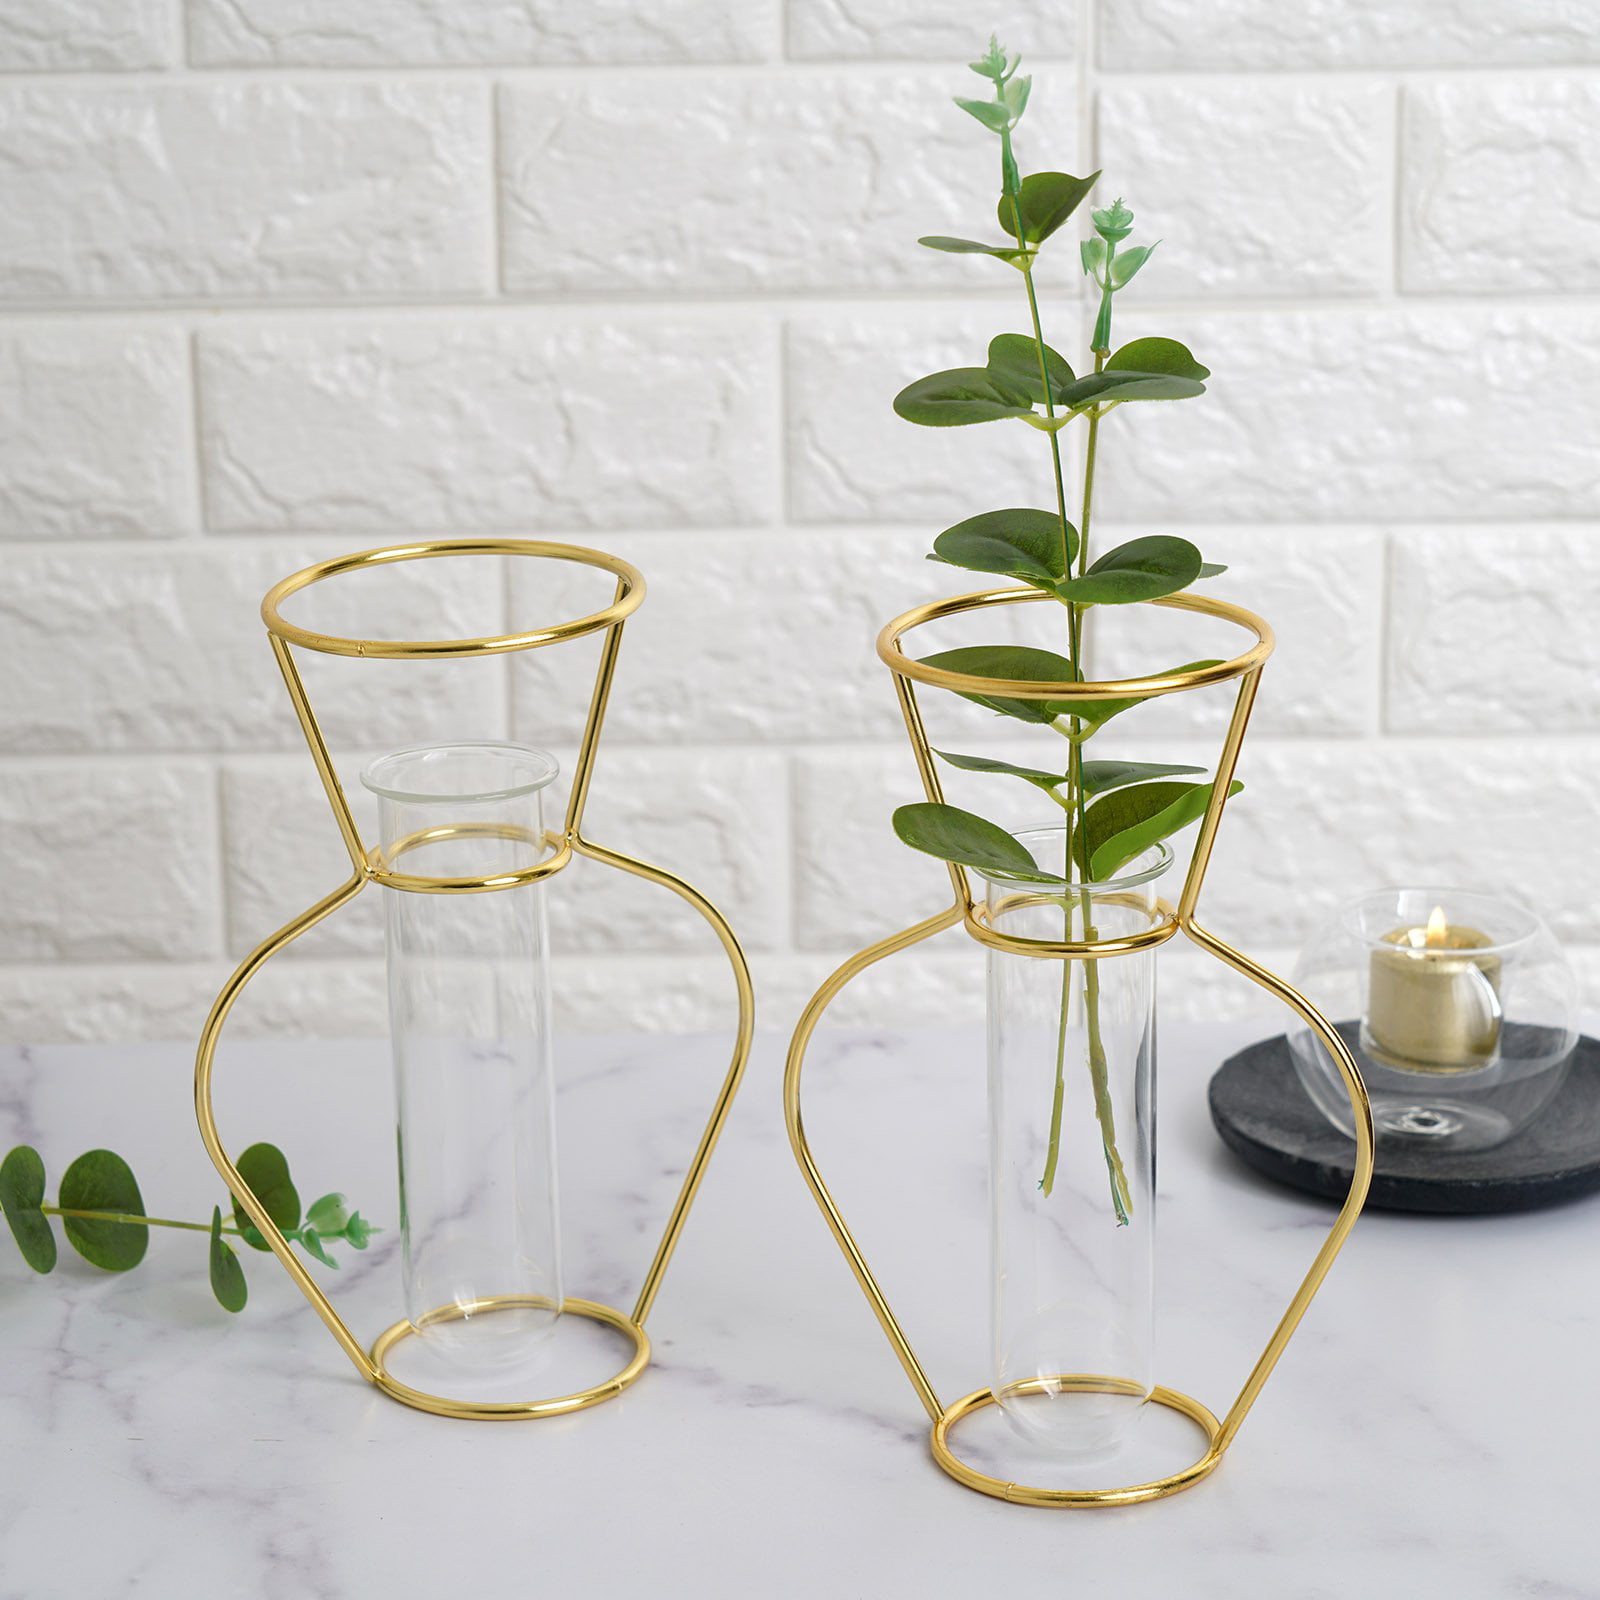 SCRTB Metal Glass Vase 1 Pcs Test Tube Vase,Gold Vases,Geometric Vase,Gold Color Vase Decoration for Home Office Wedding Holiday Party Gifts 